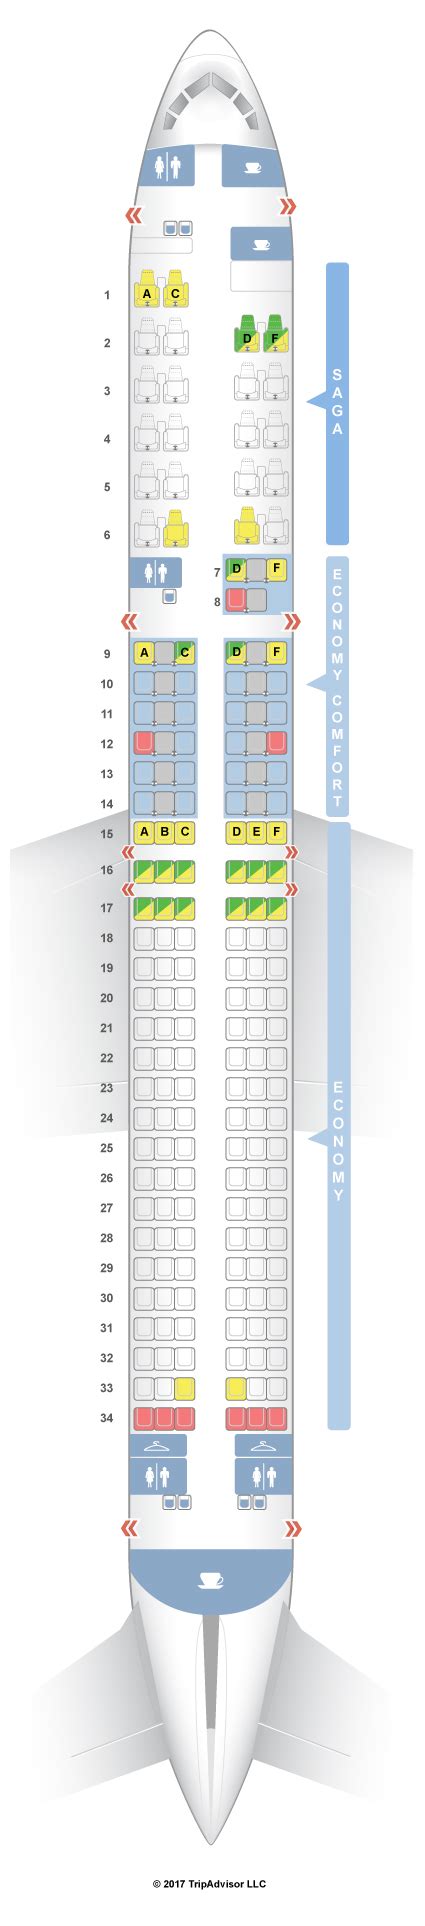 Seat 16C on Icelandair Boeing 757-200 (75W) Ad